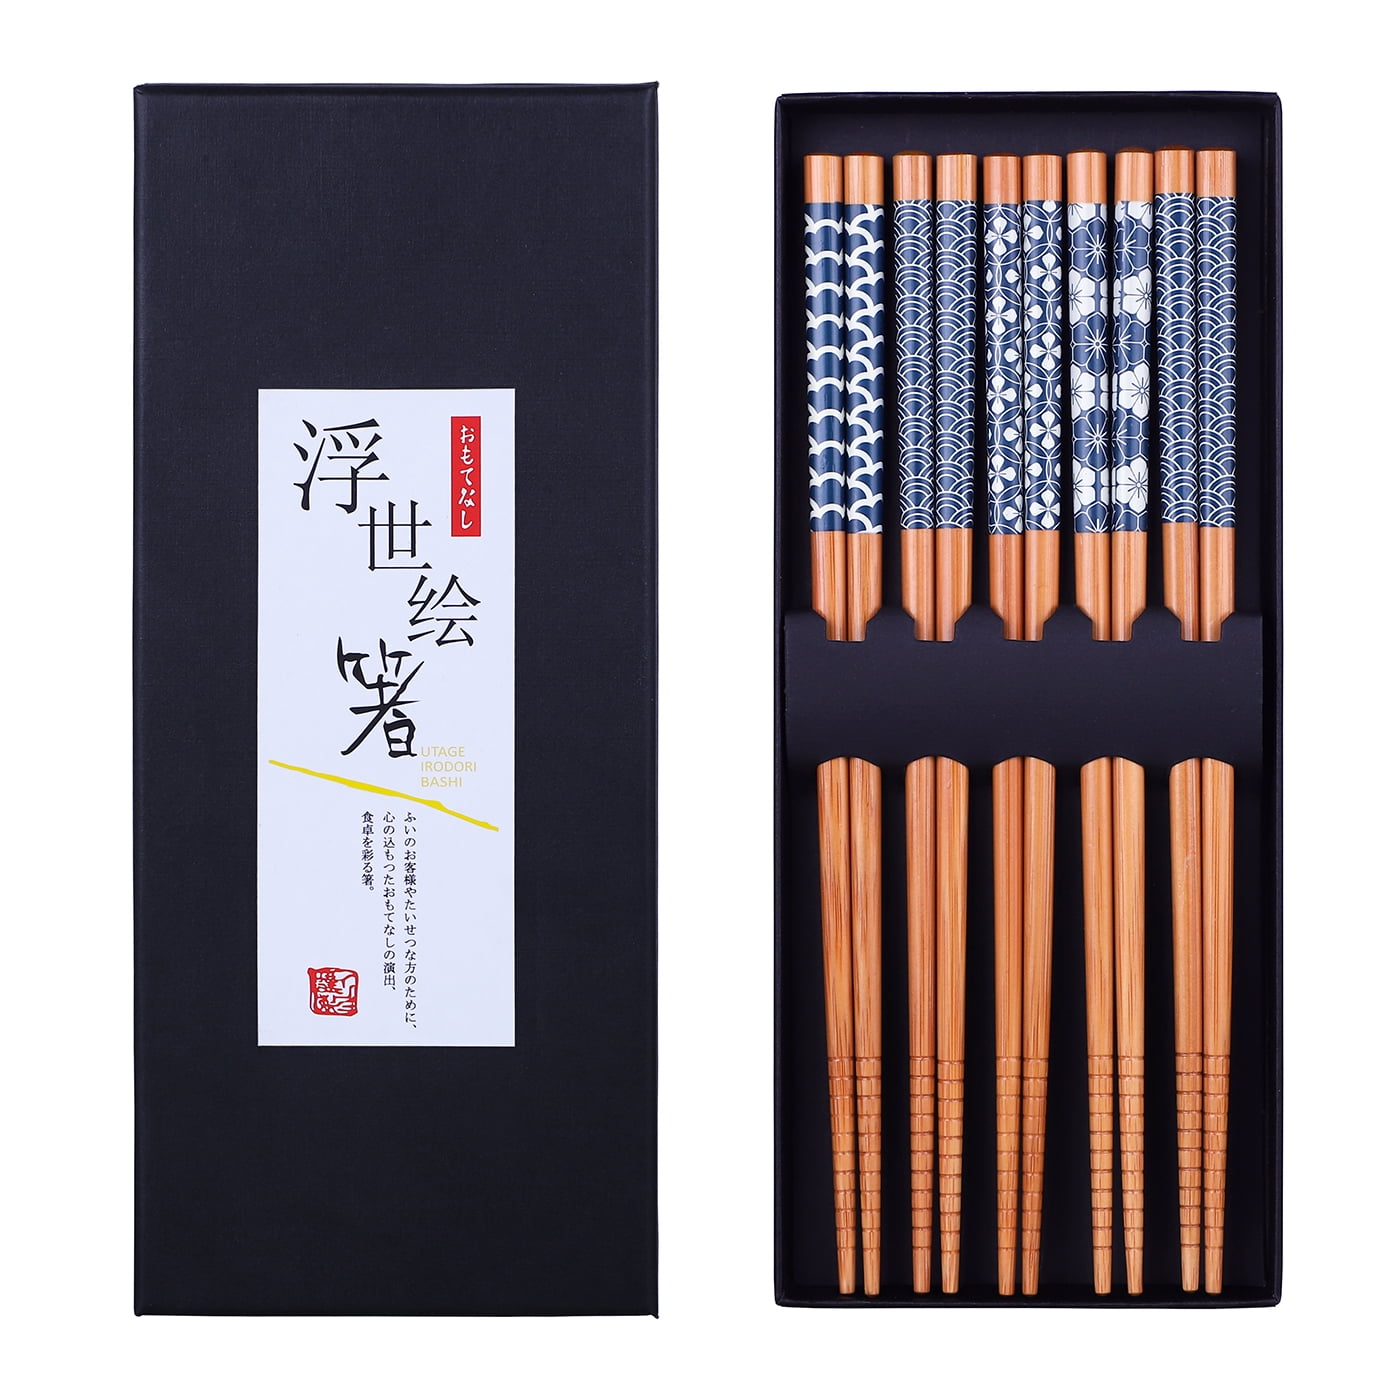 China bamboo chopsticks red dragon chinese pattern reusable 1pair usefulUTH4 